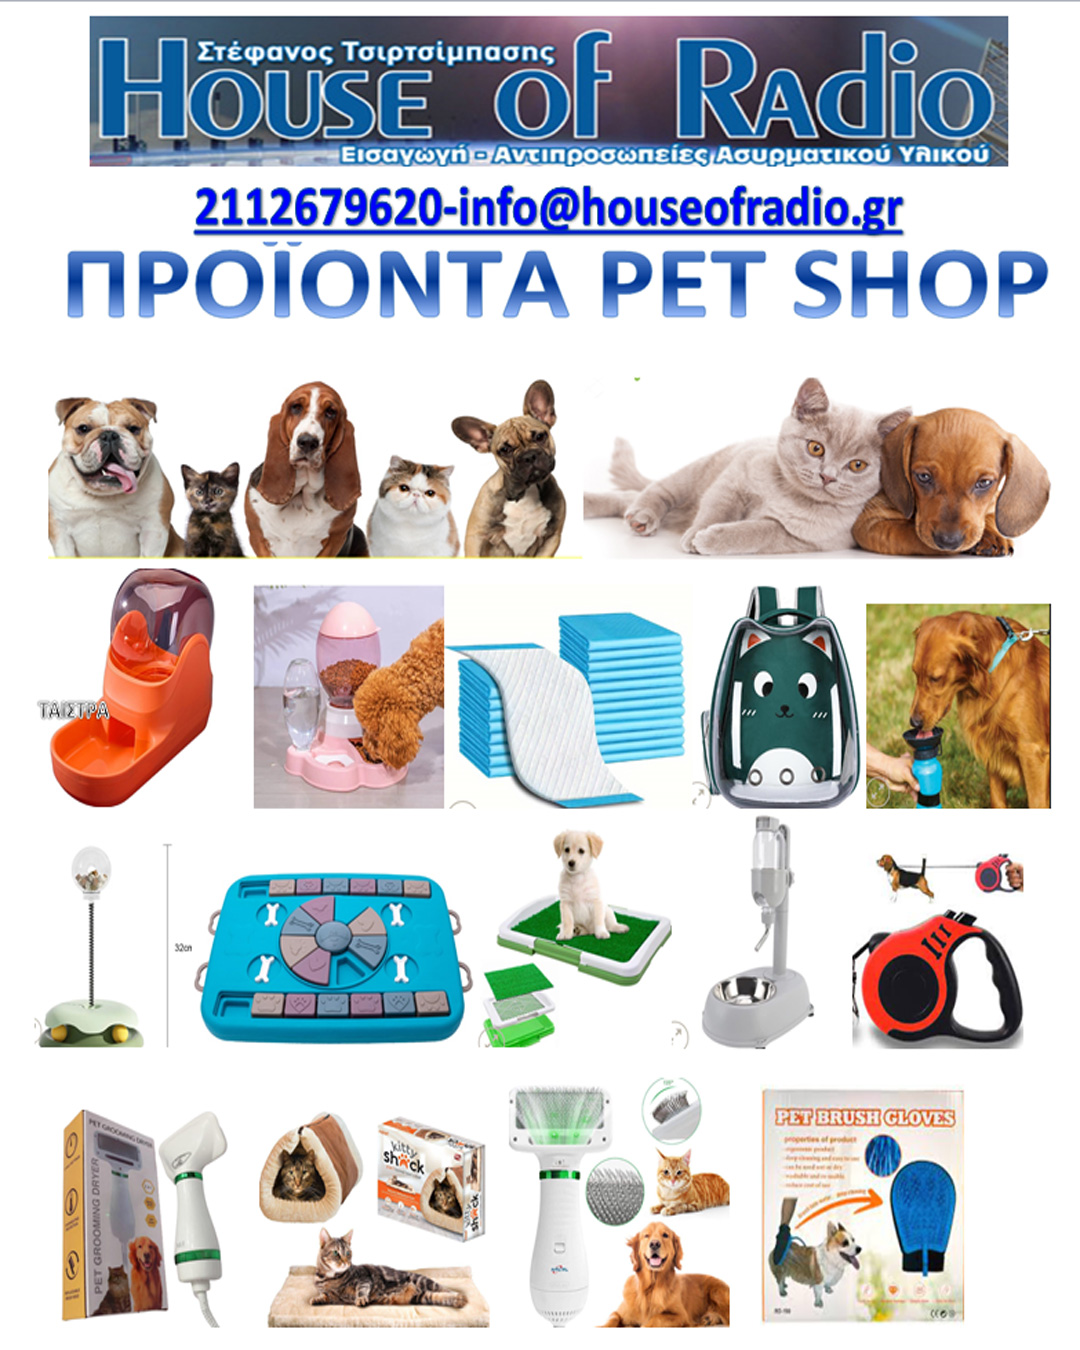 House of Radio Pet Shop